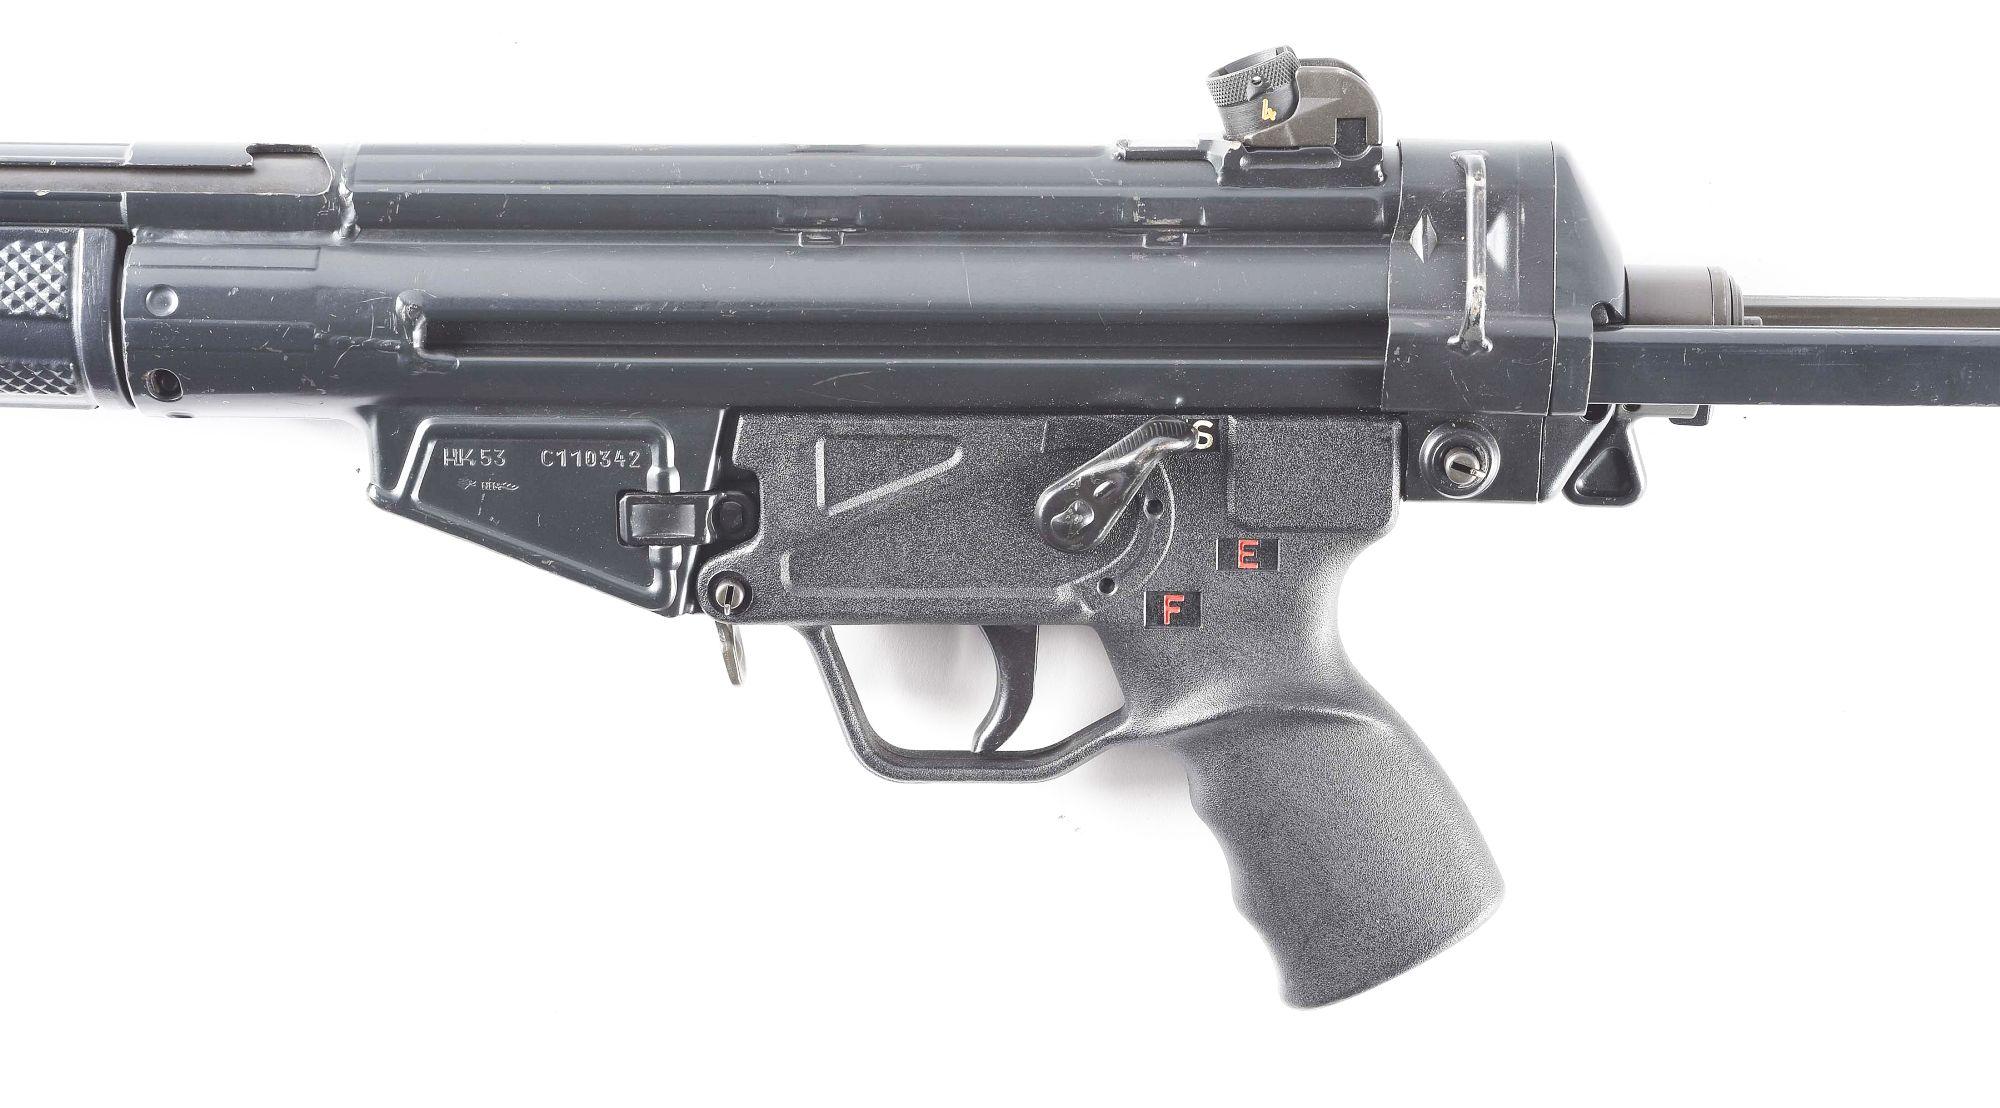 (N) THREE POSITION SELECTOR HECKLER & KOCH MODEL 53 MACHINE GUN (PRE-86 DEALER SAMPLE).